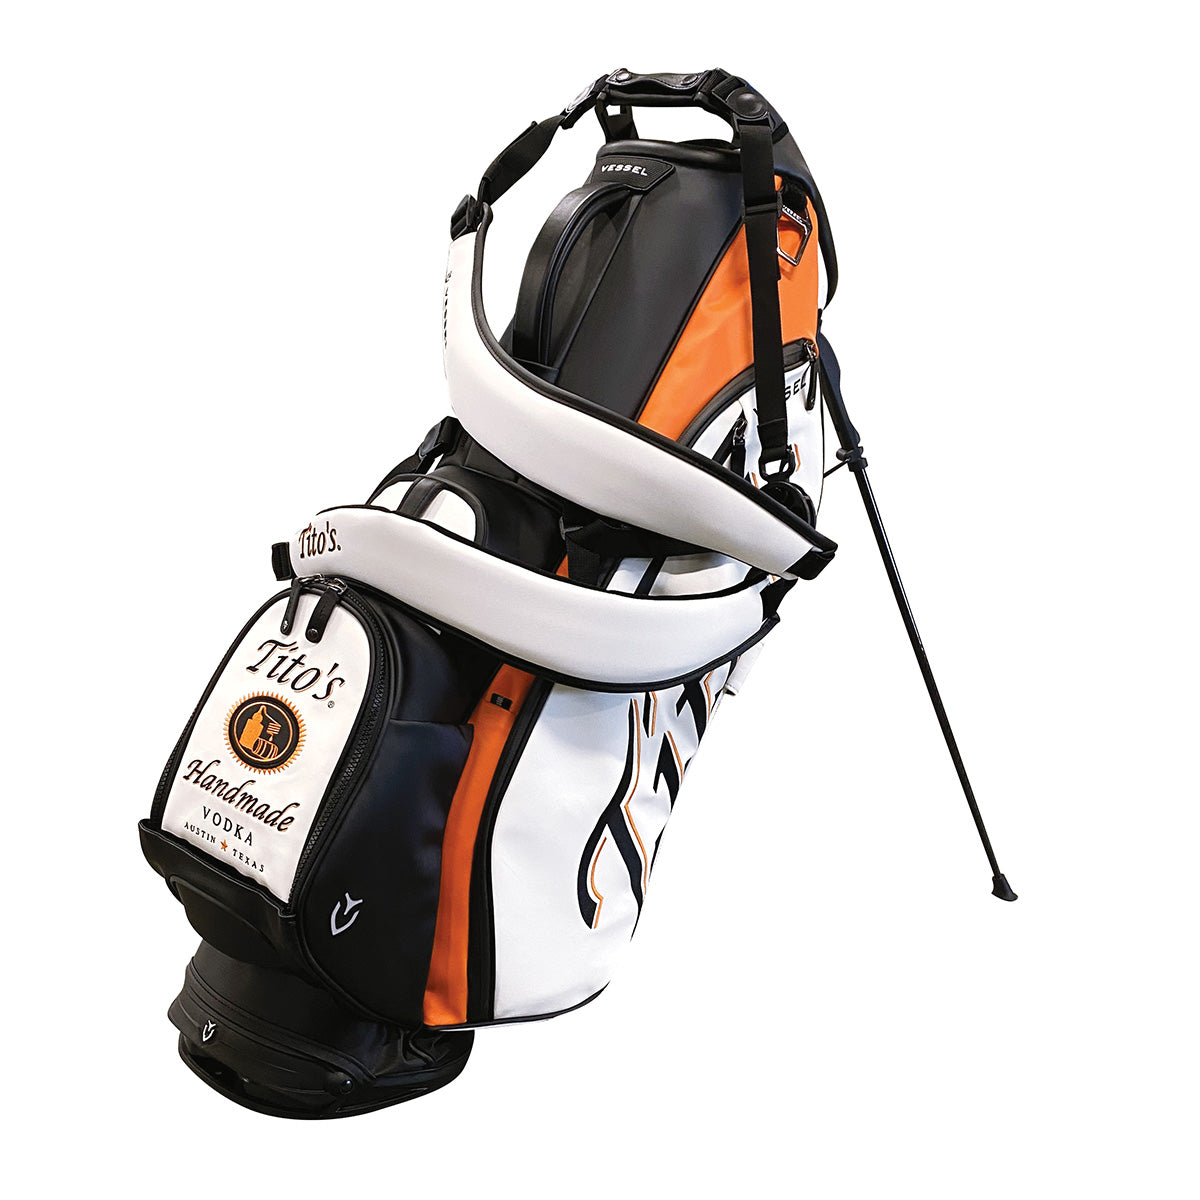 Back of white, black, and orange VESSEL golf bag with Tito's Handmade Vodka logo and wordmarks